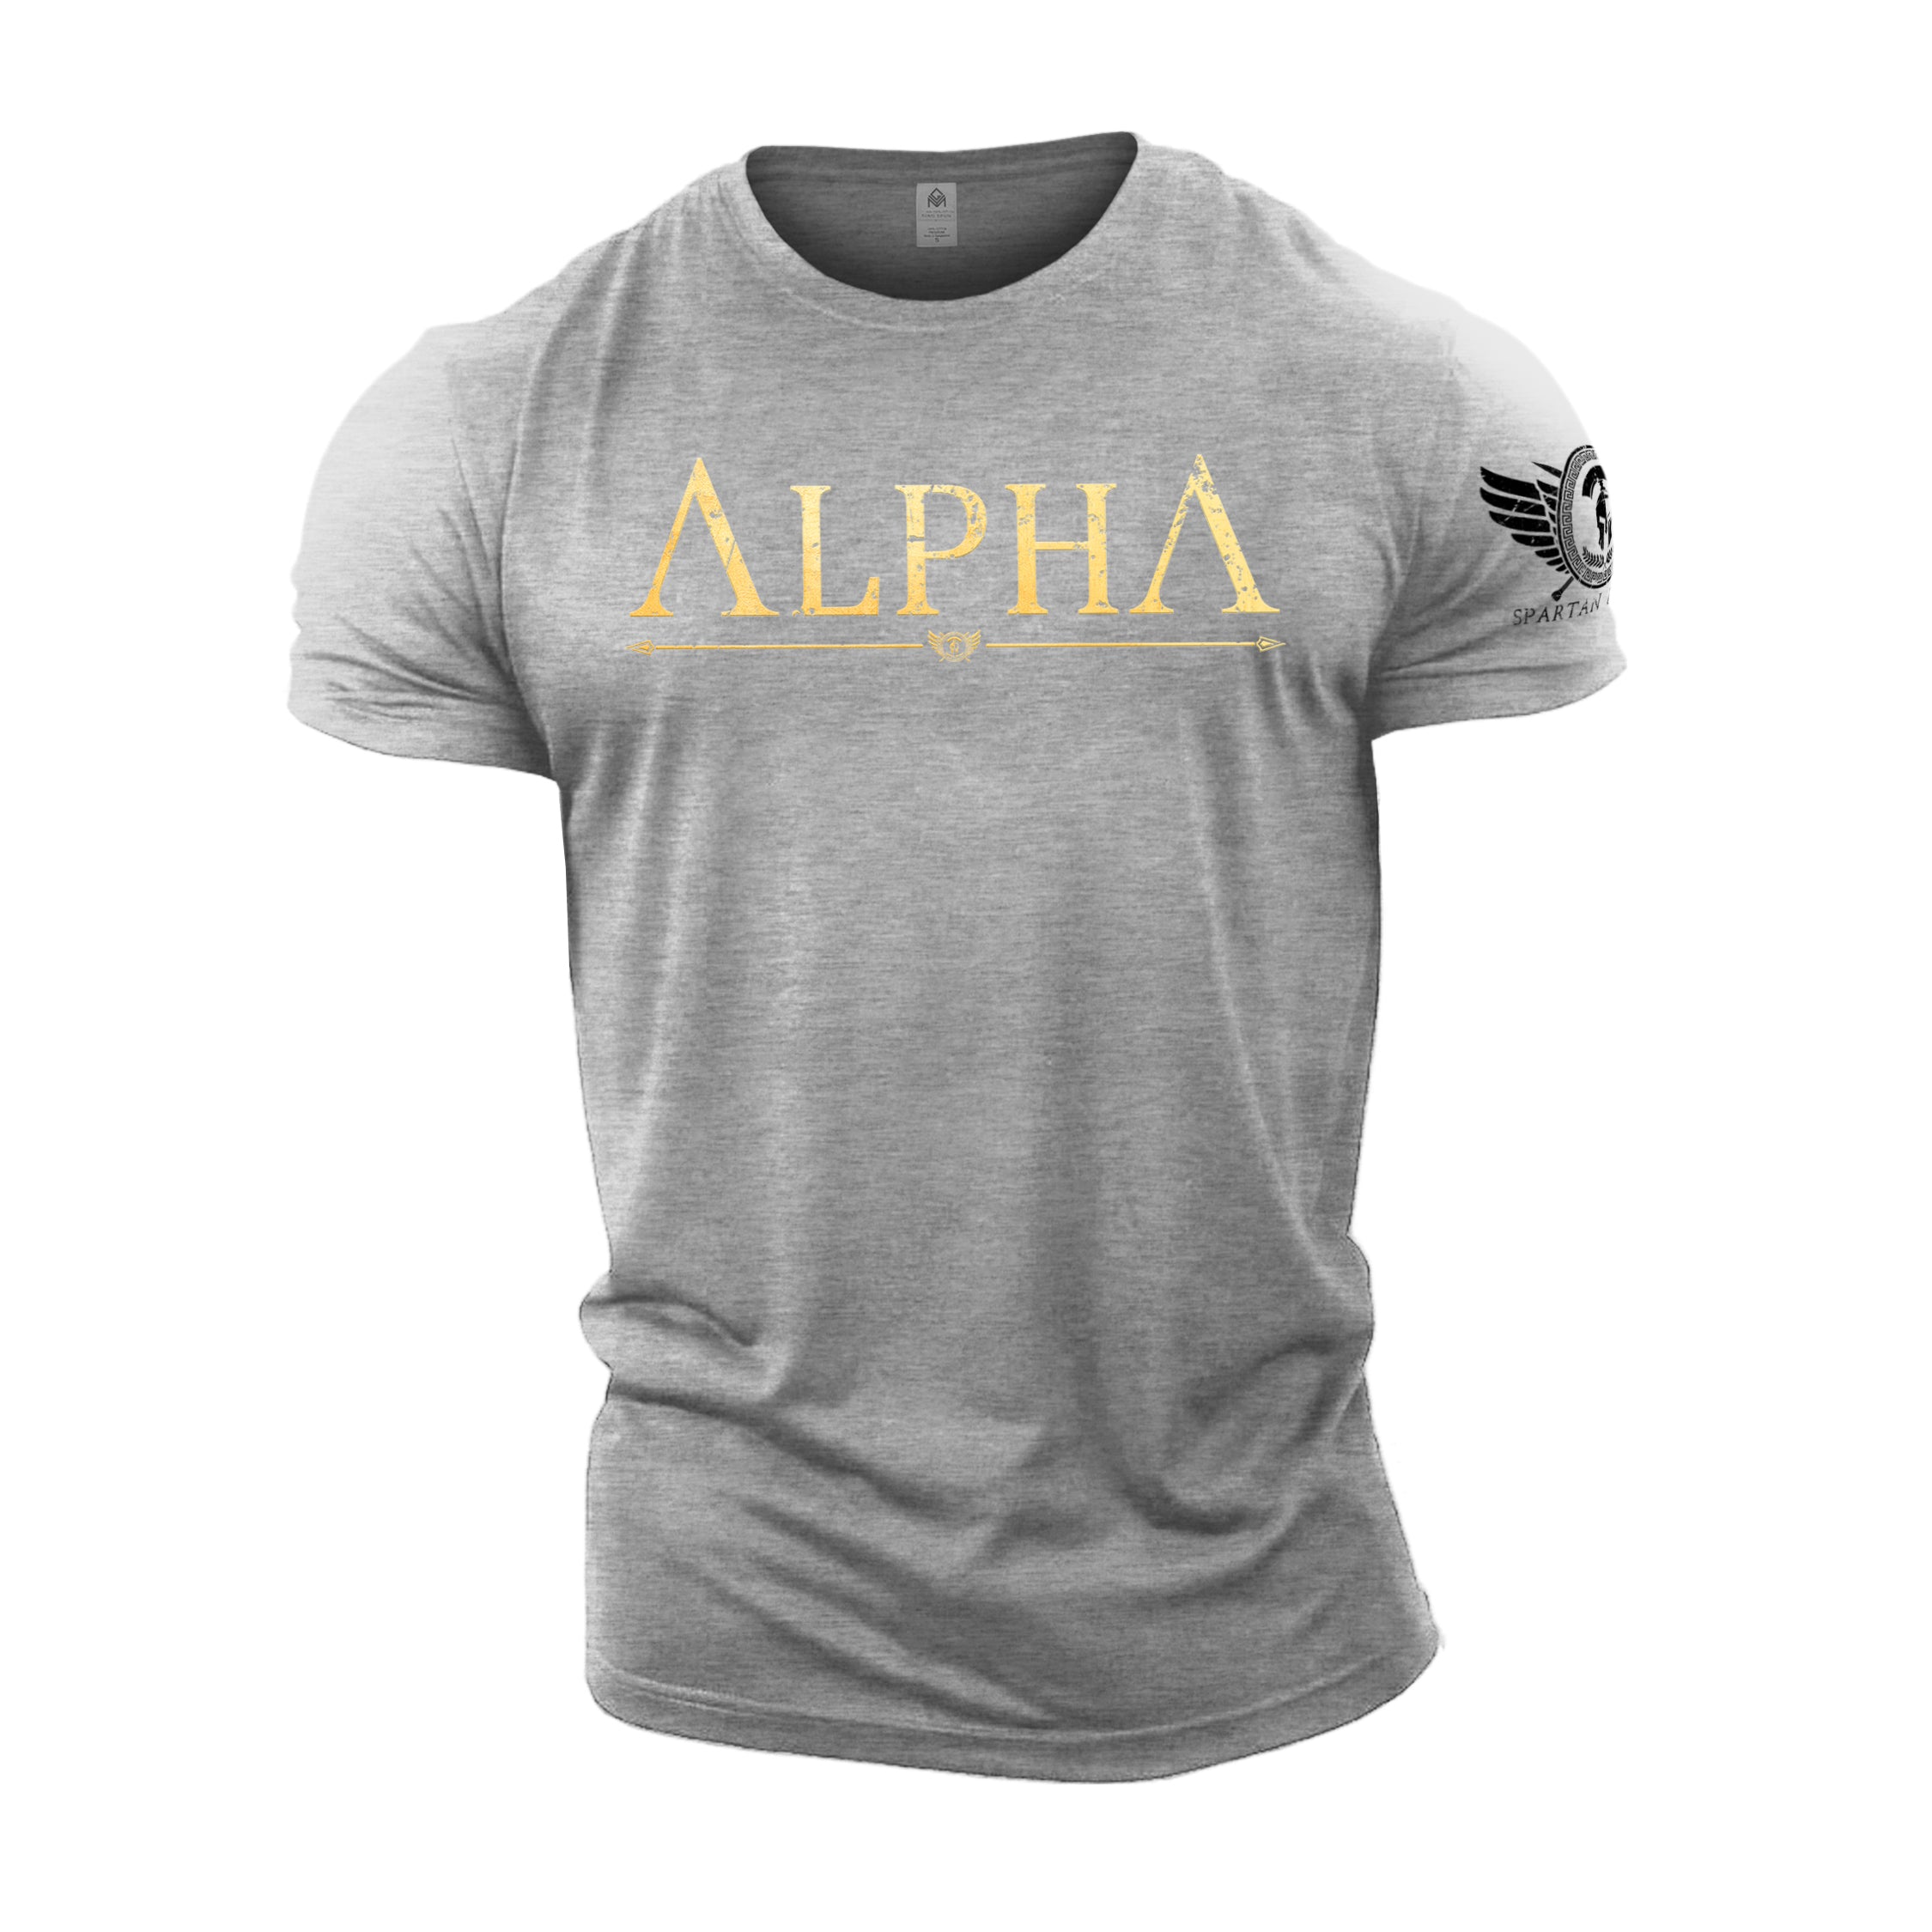 ALPHA Gold - Spartan Forged - Gym T-Shirt